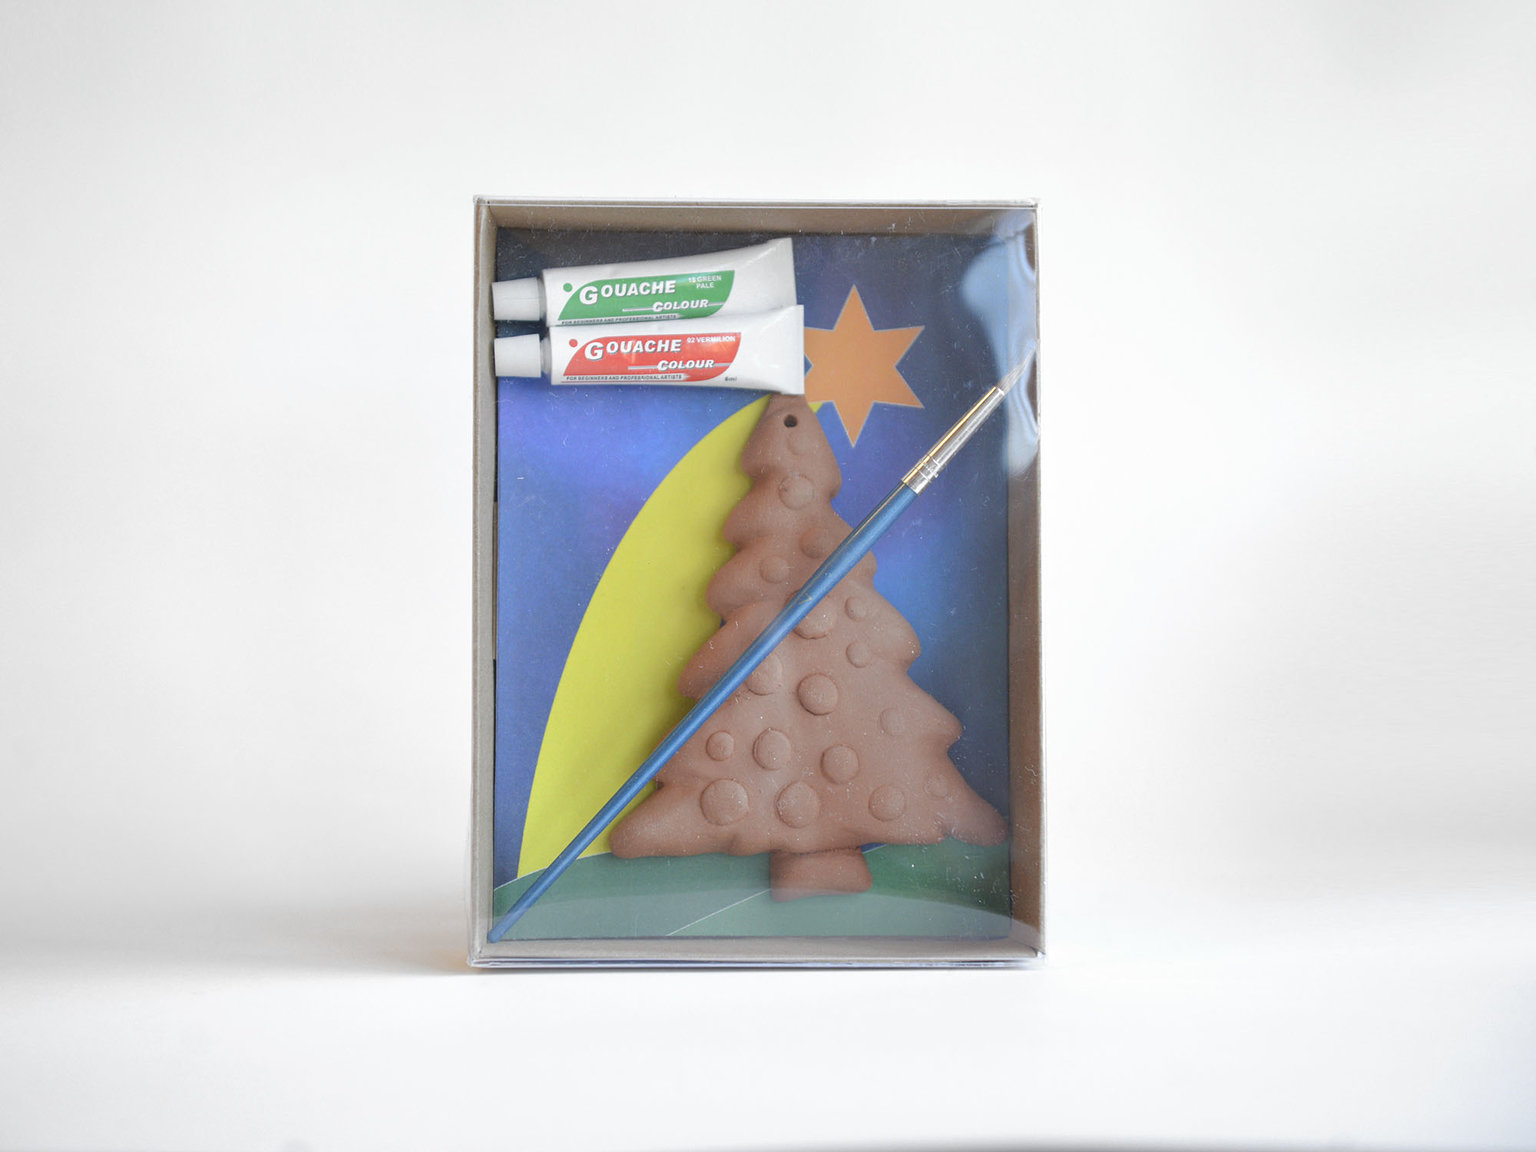 "Painting the Christmas tree" kit